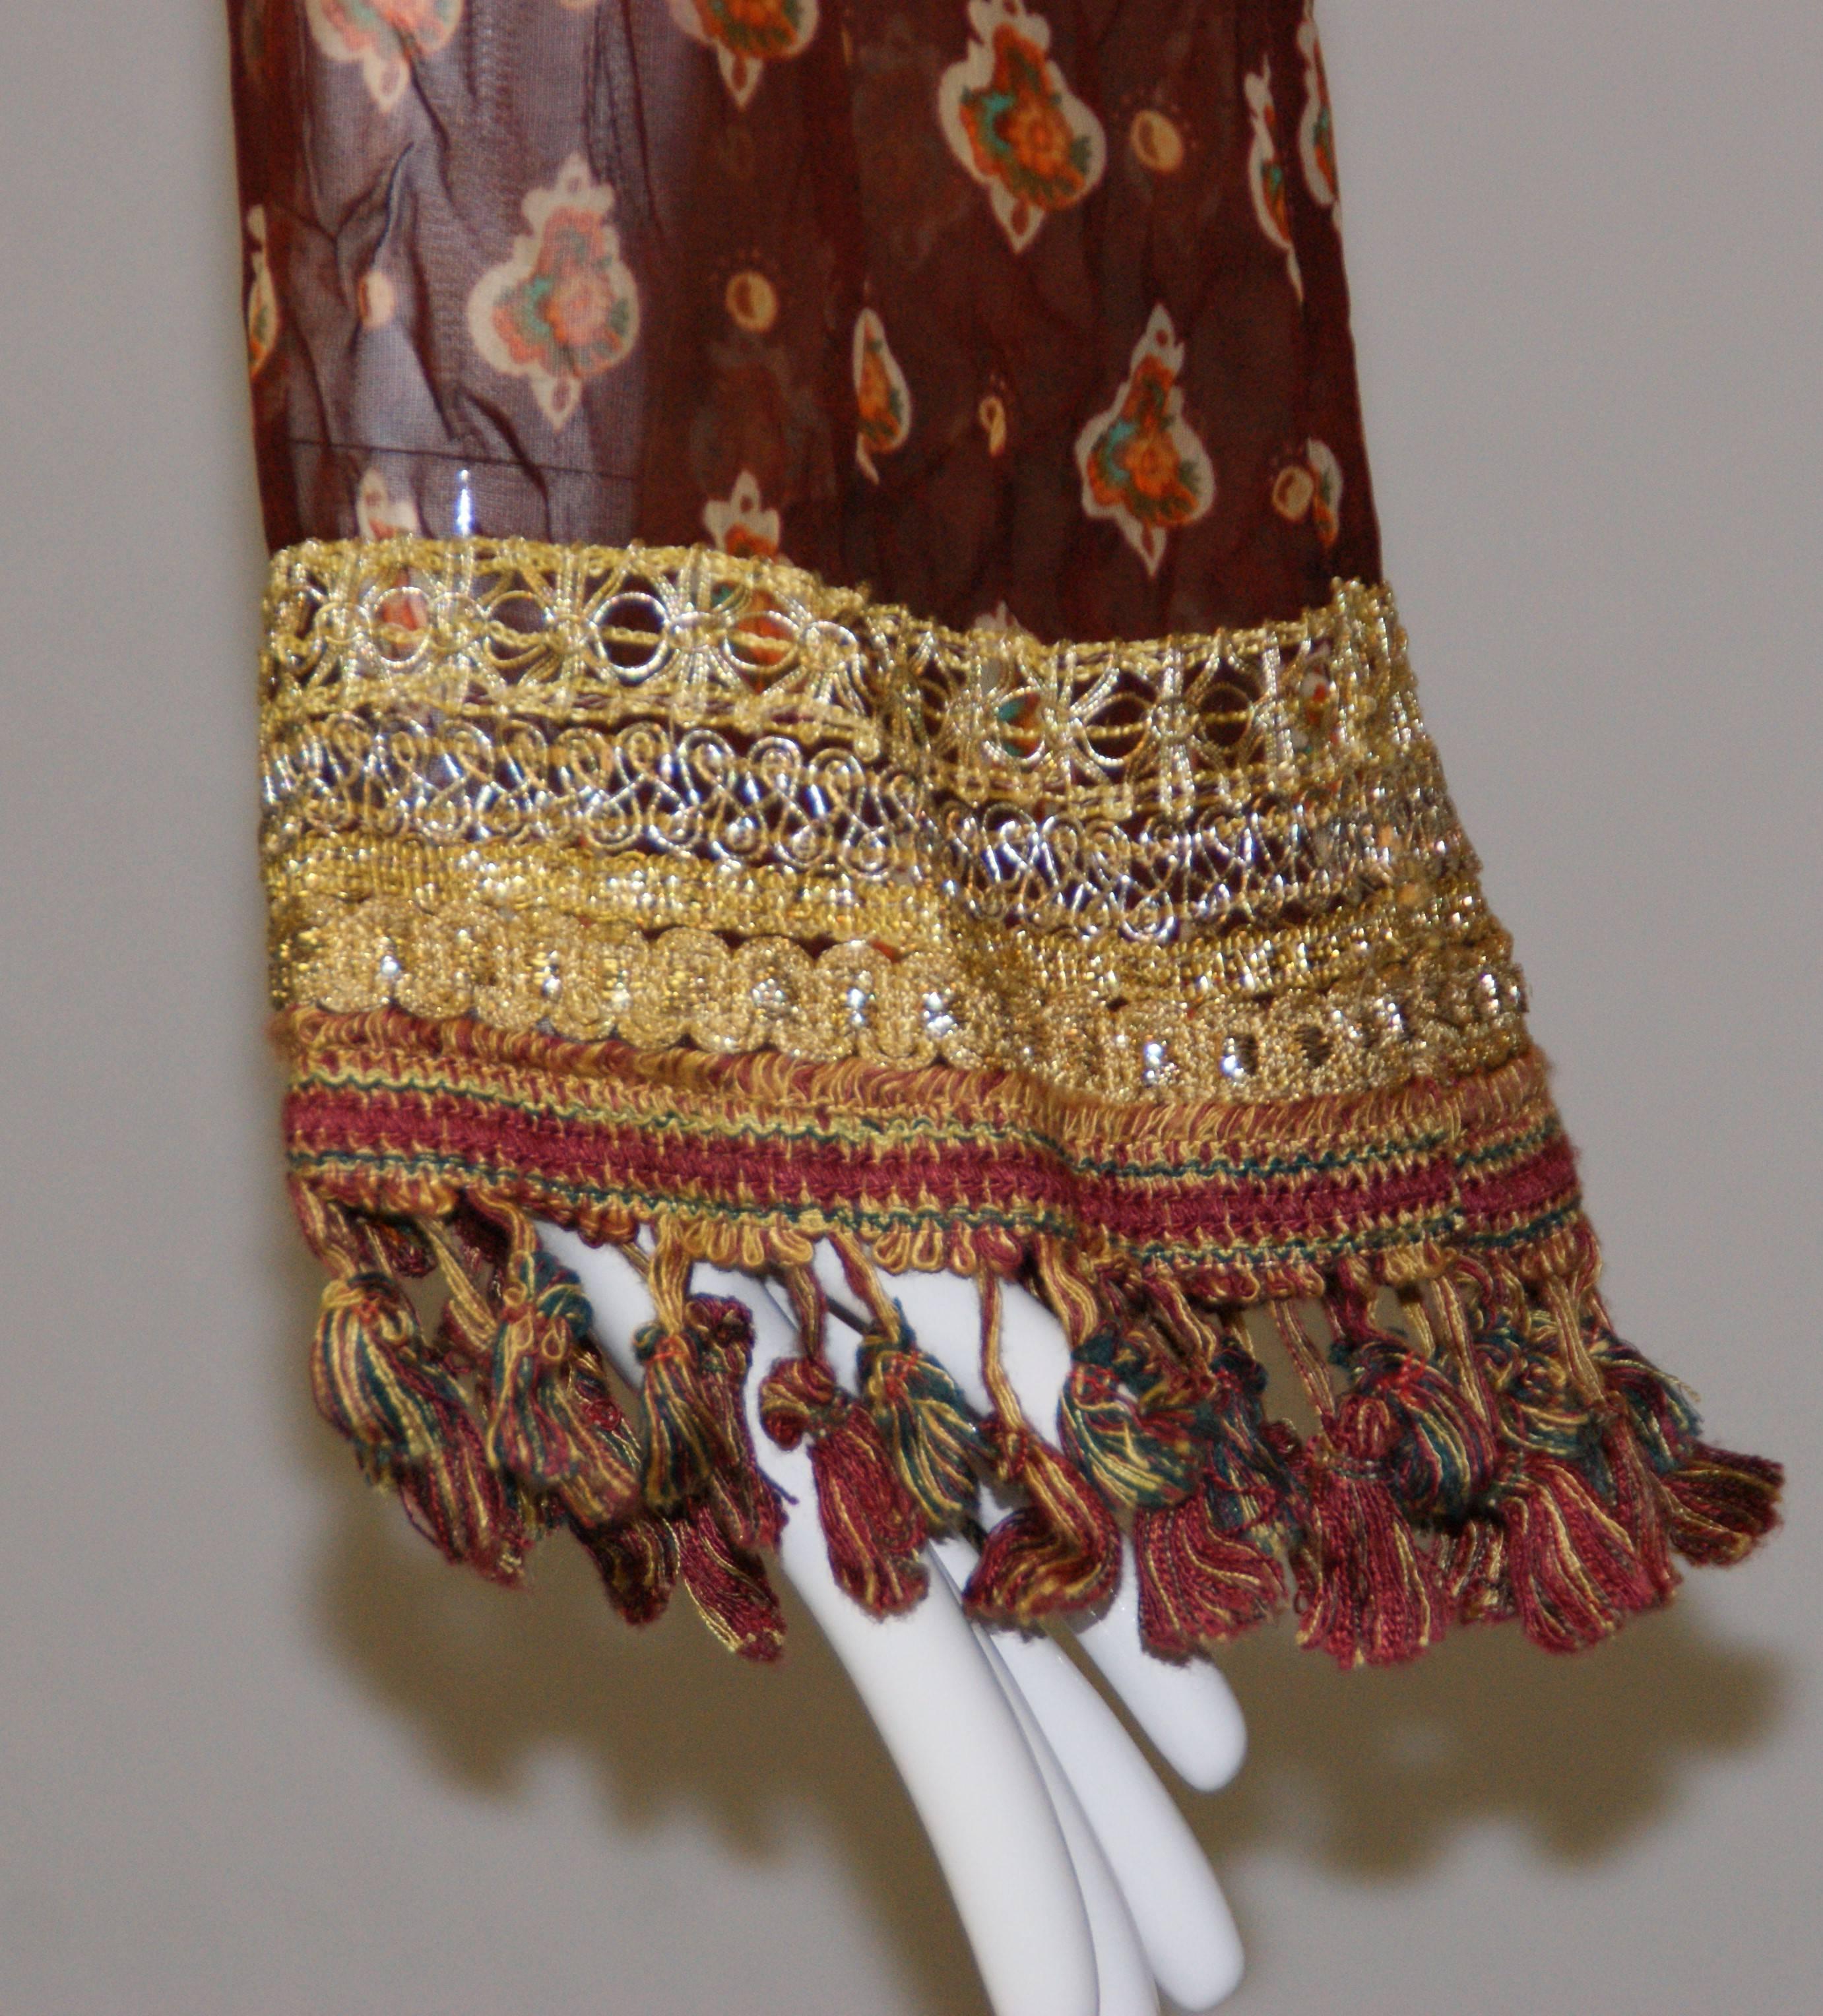 Women's S/S 1994 Runway Dolce & Gabbana Gypsy Fringe Crop Top & Skirt Ensemble Suit 